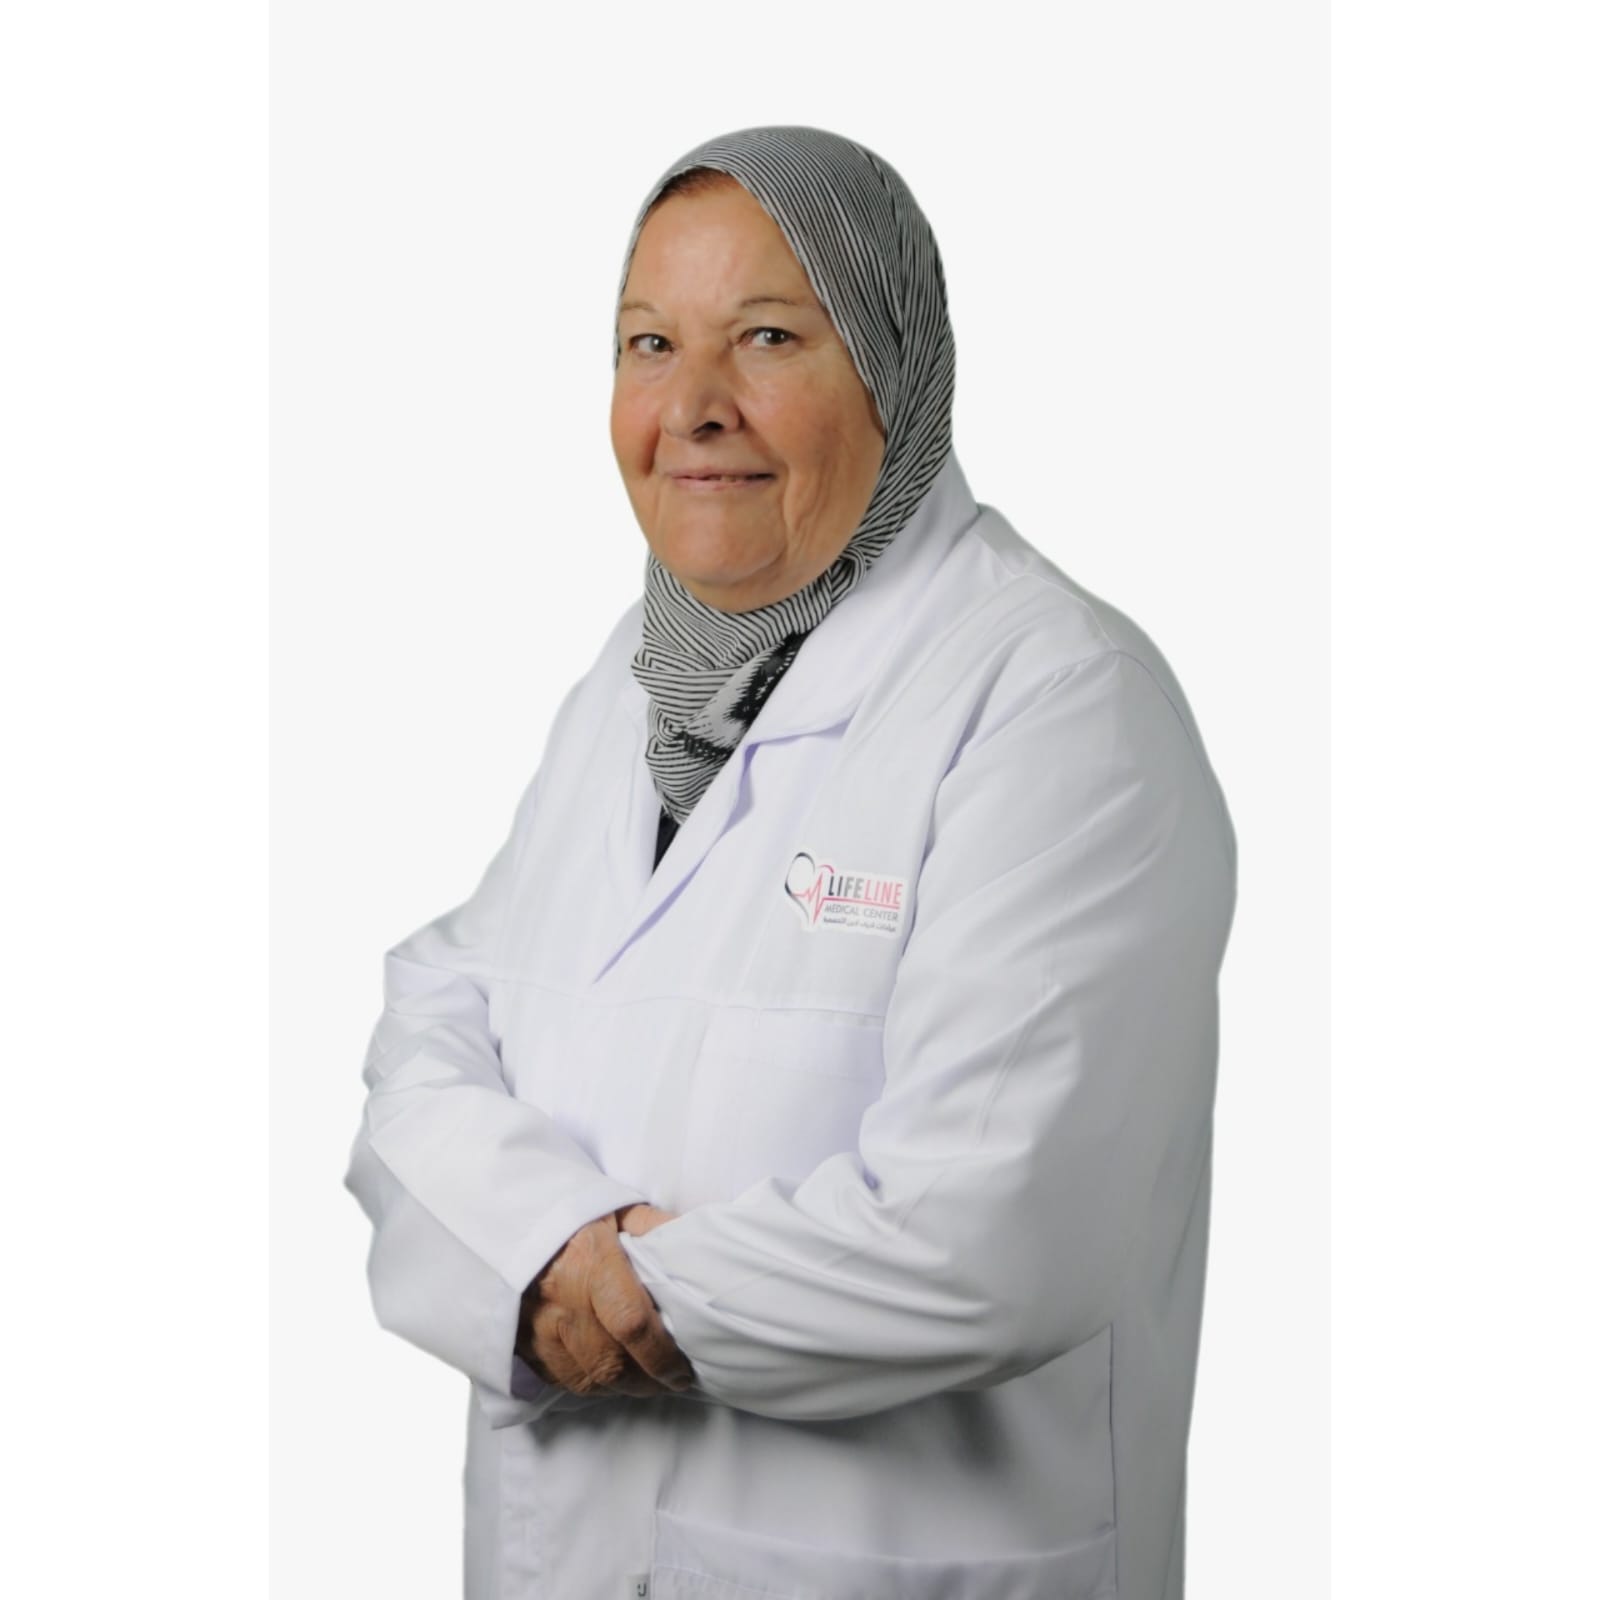 Dr. Bataa Abdel Baset Ali